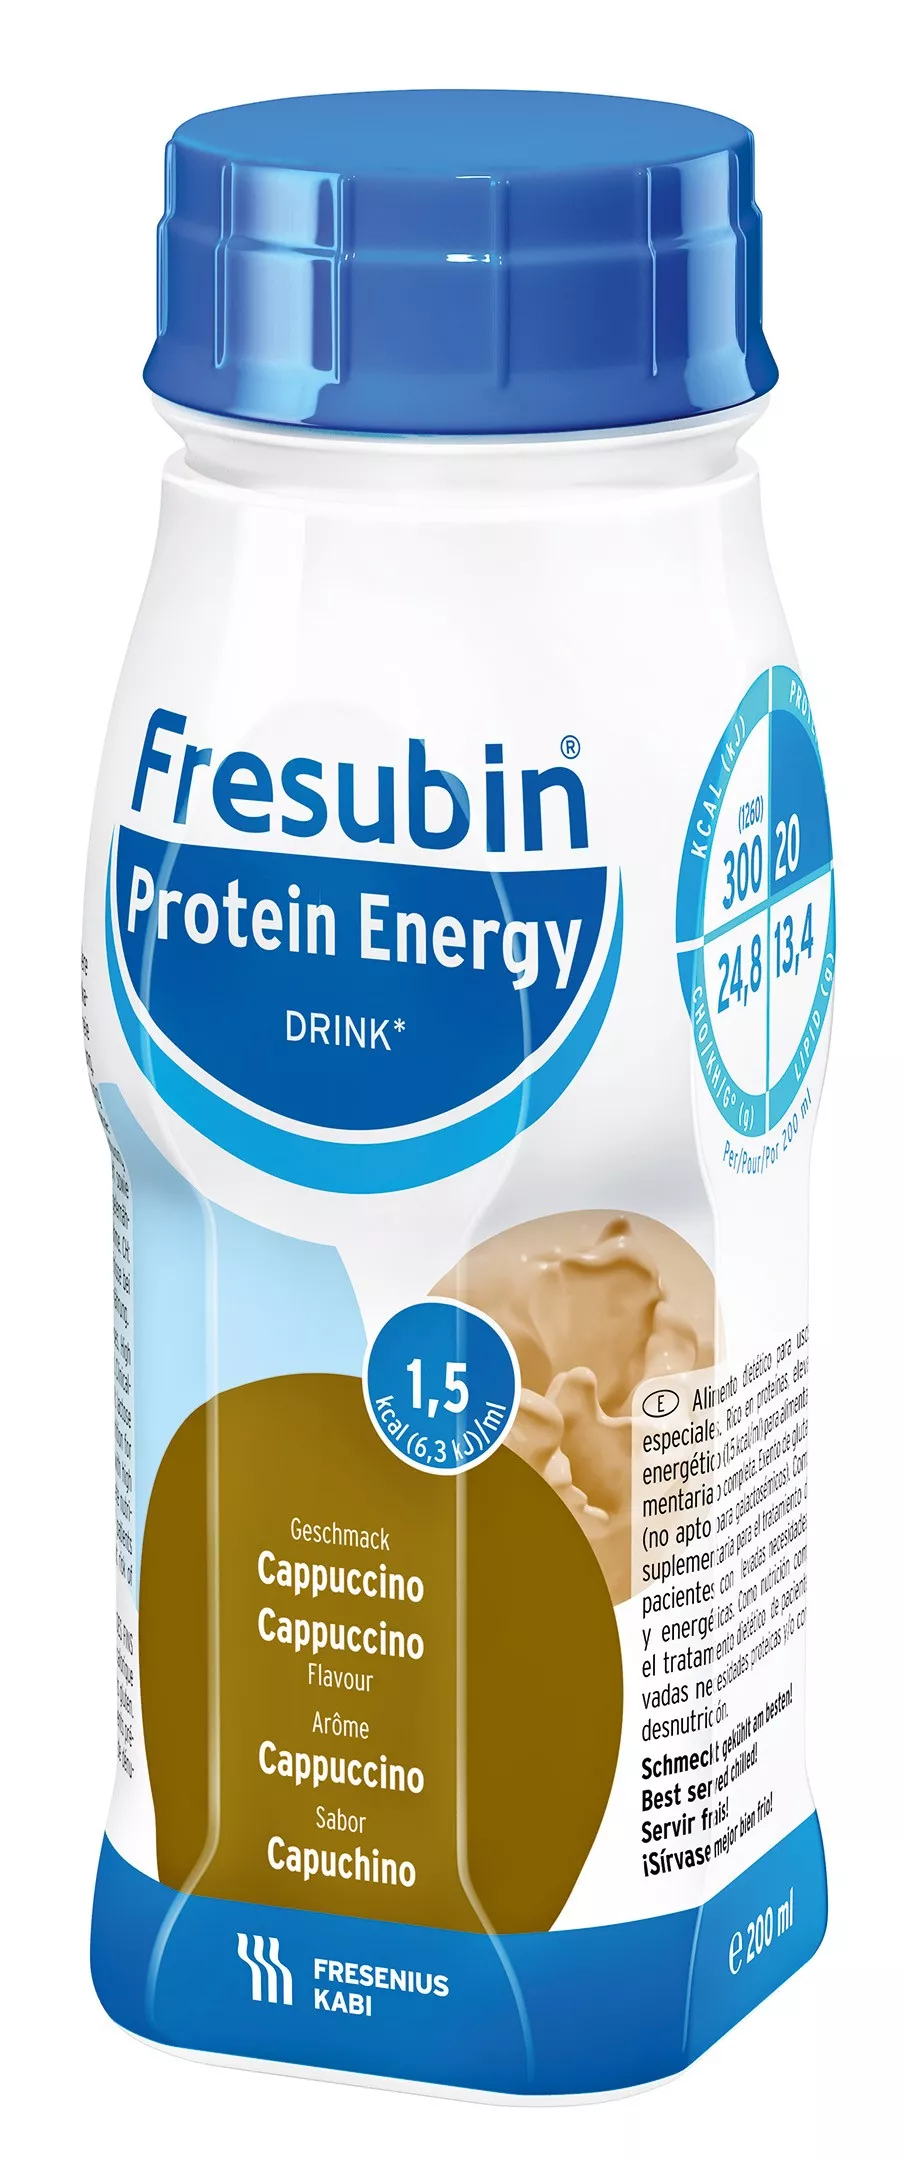 Bautura Fresubin Protein Energy 1,5kcal cu aroma de cappuccino, 200ml, Fresenius Kabi, [],remediumfarm.ro